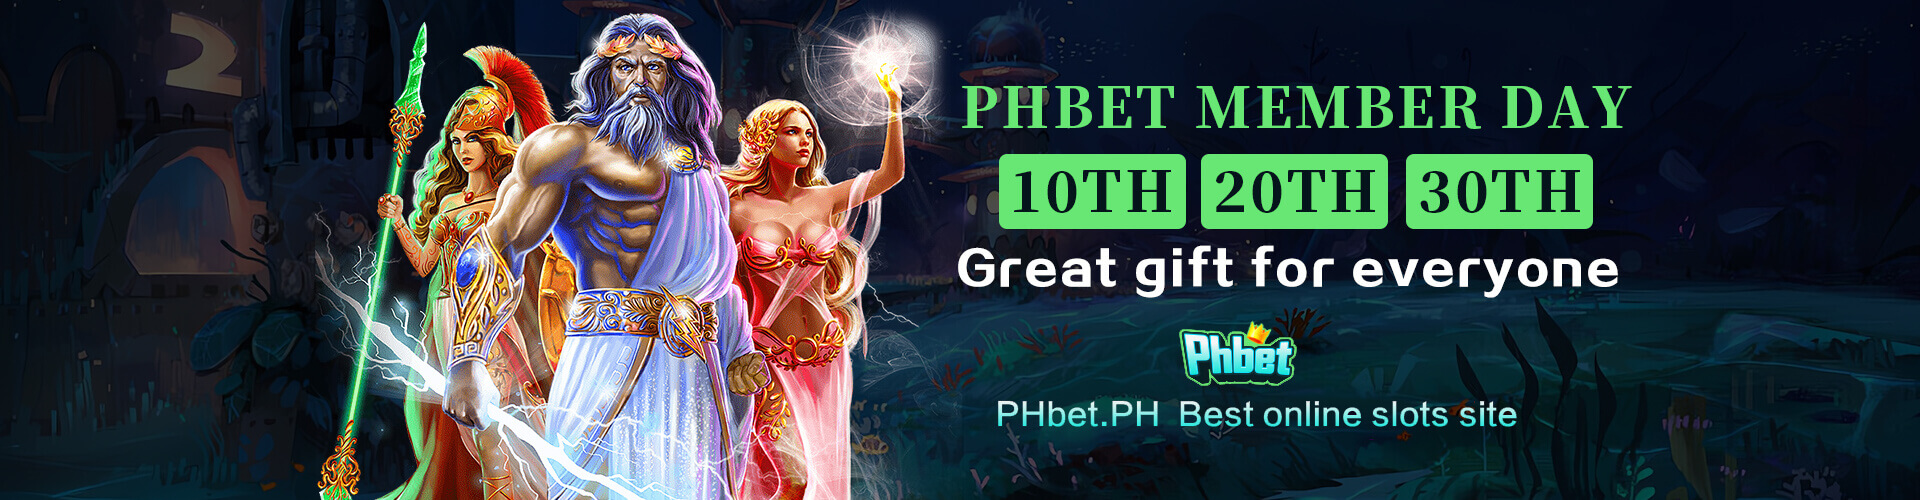 Phbet banner